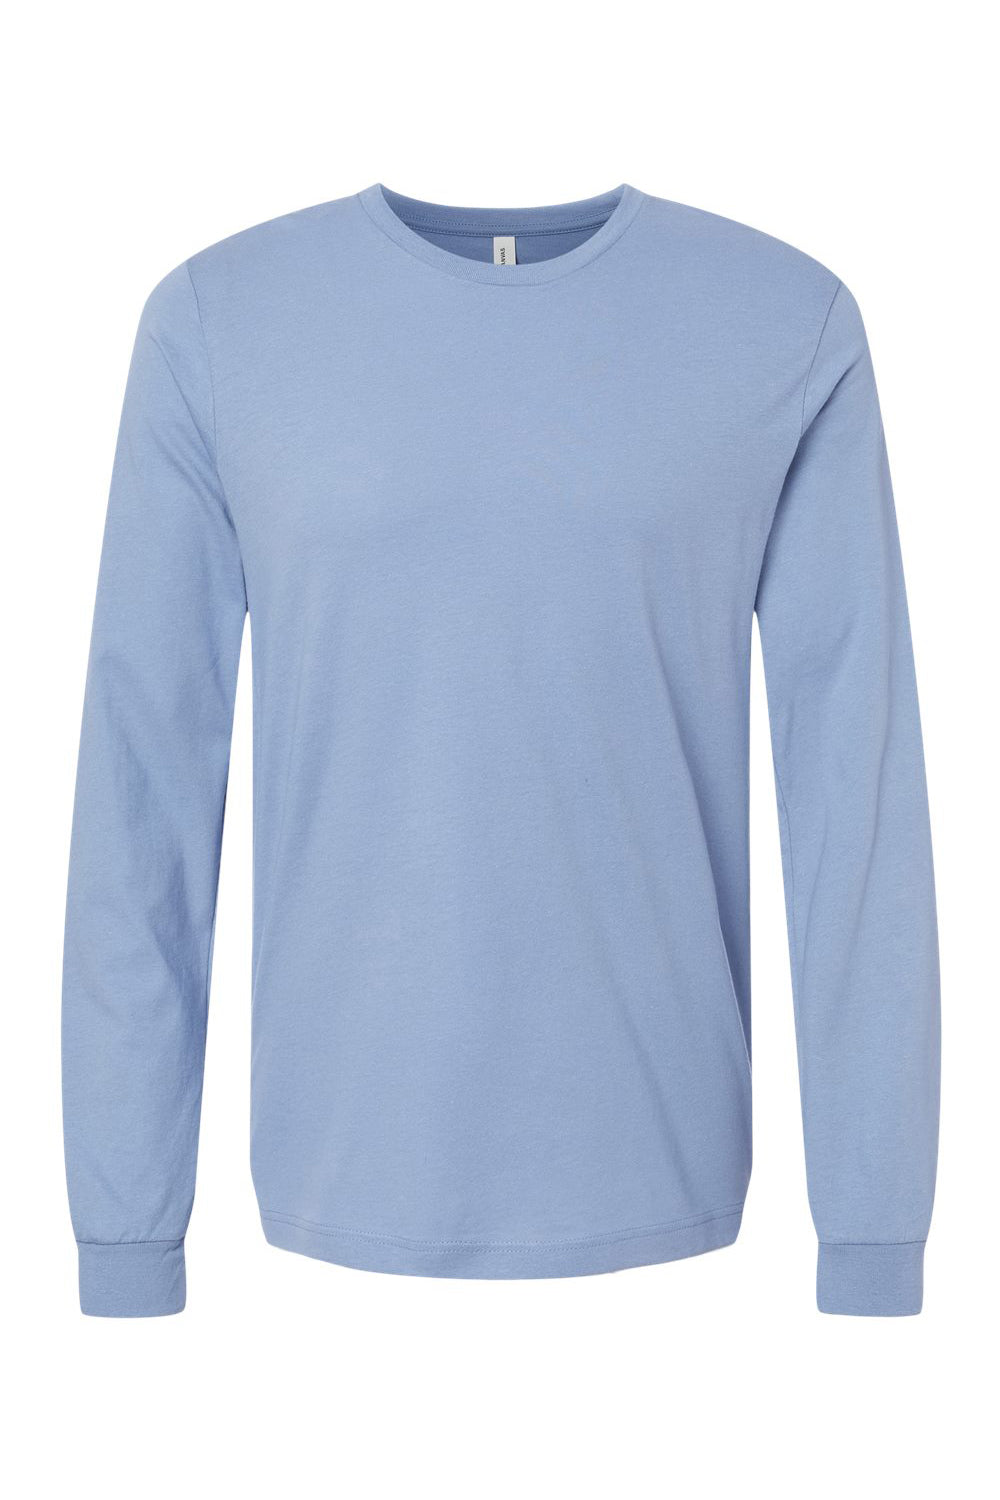 Bella + Canvas BC3501/3501 Mens Jersey Long Sleeve Crewneck T-Shirt Lavender Blue Flat Front